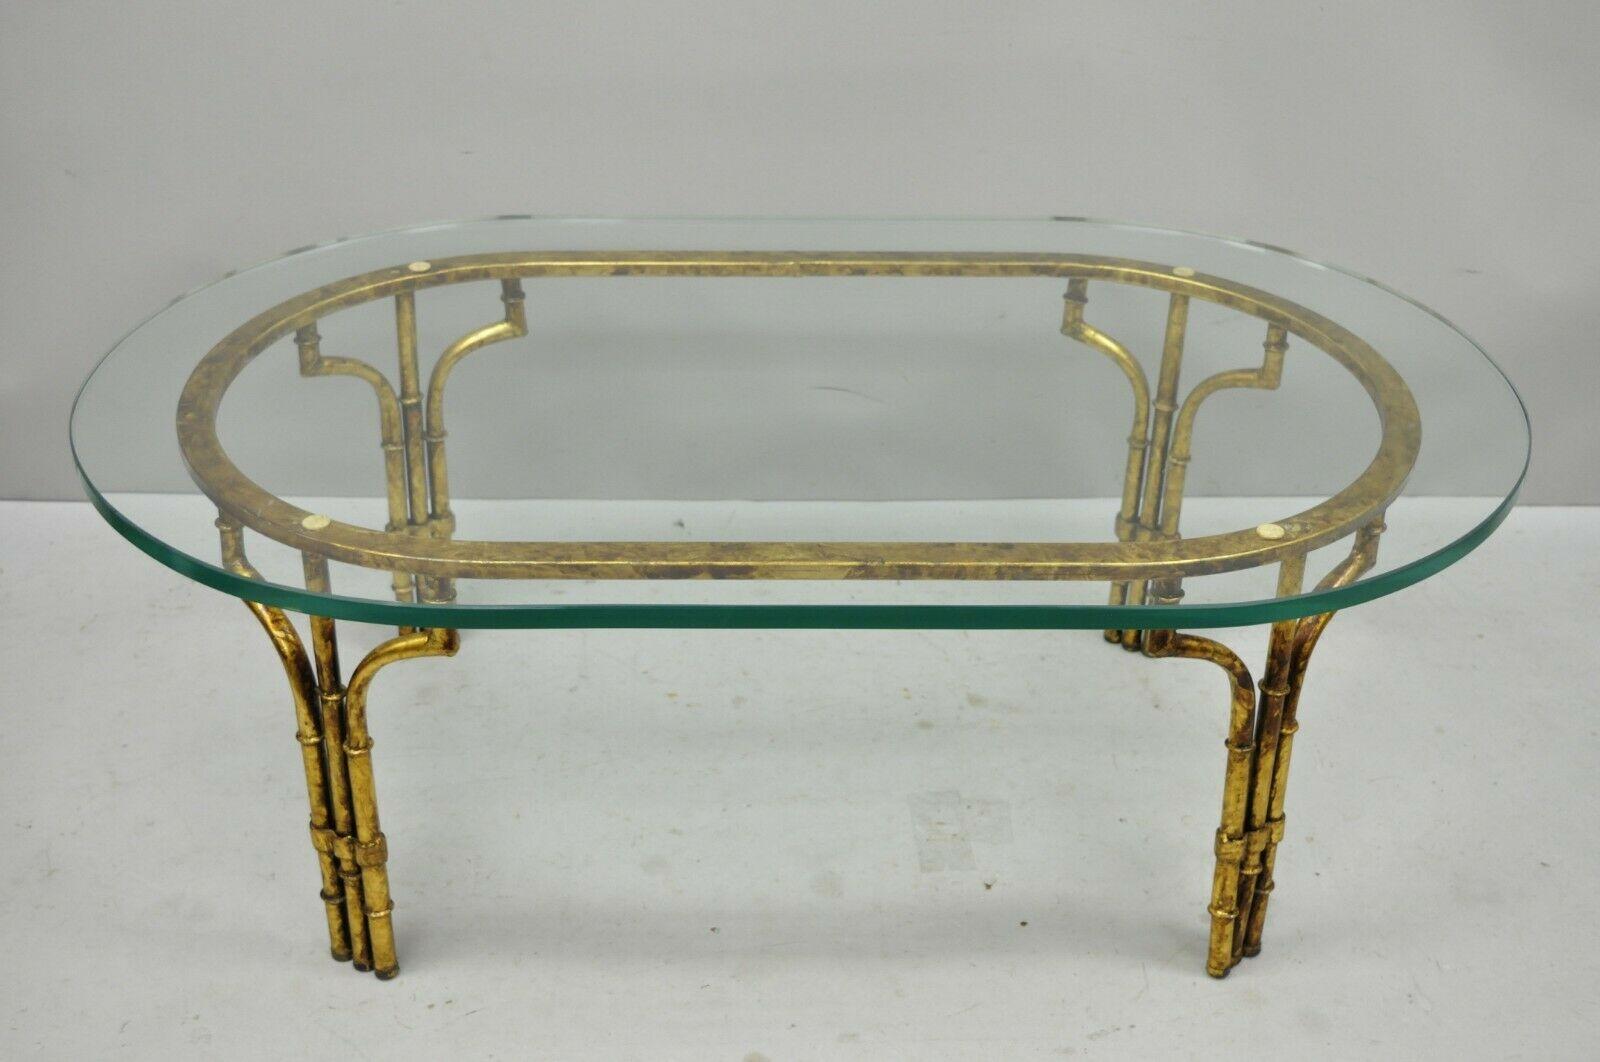 Vintage Italian Hollywood Regency faux bamboo oval glass gold gilt iron coffee table. Item features gold gilt iron frame, thick oval glass top, quality Italian craftsmanship, circa mid-20th century. Measurements: 16.5